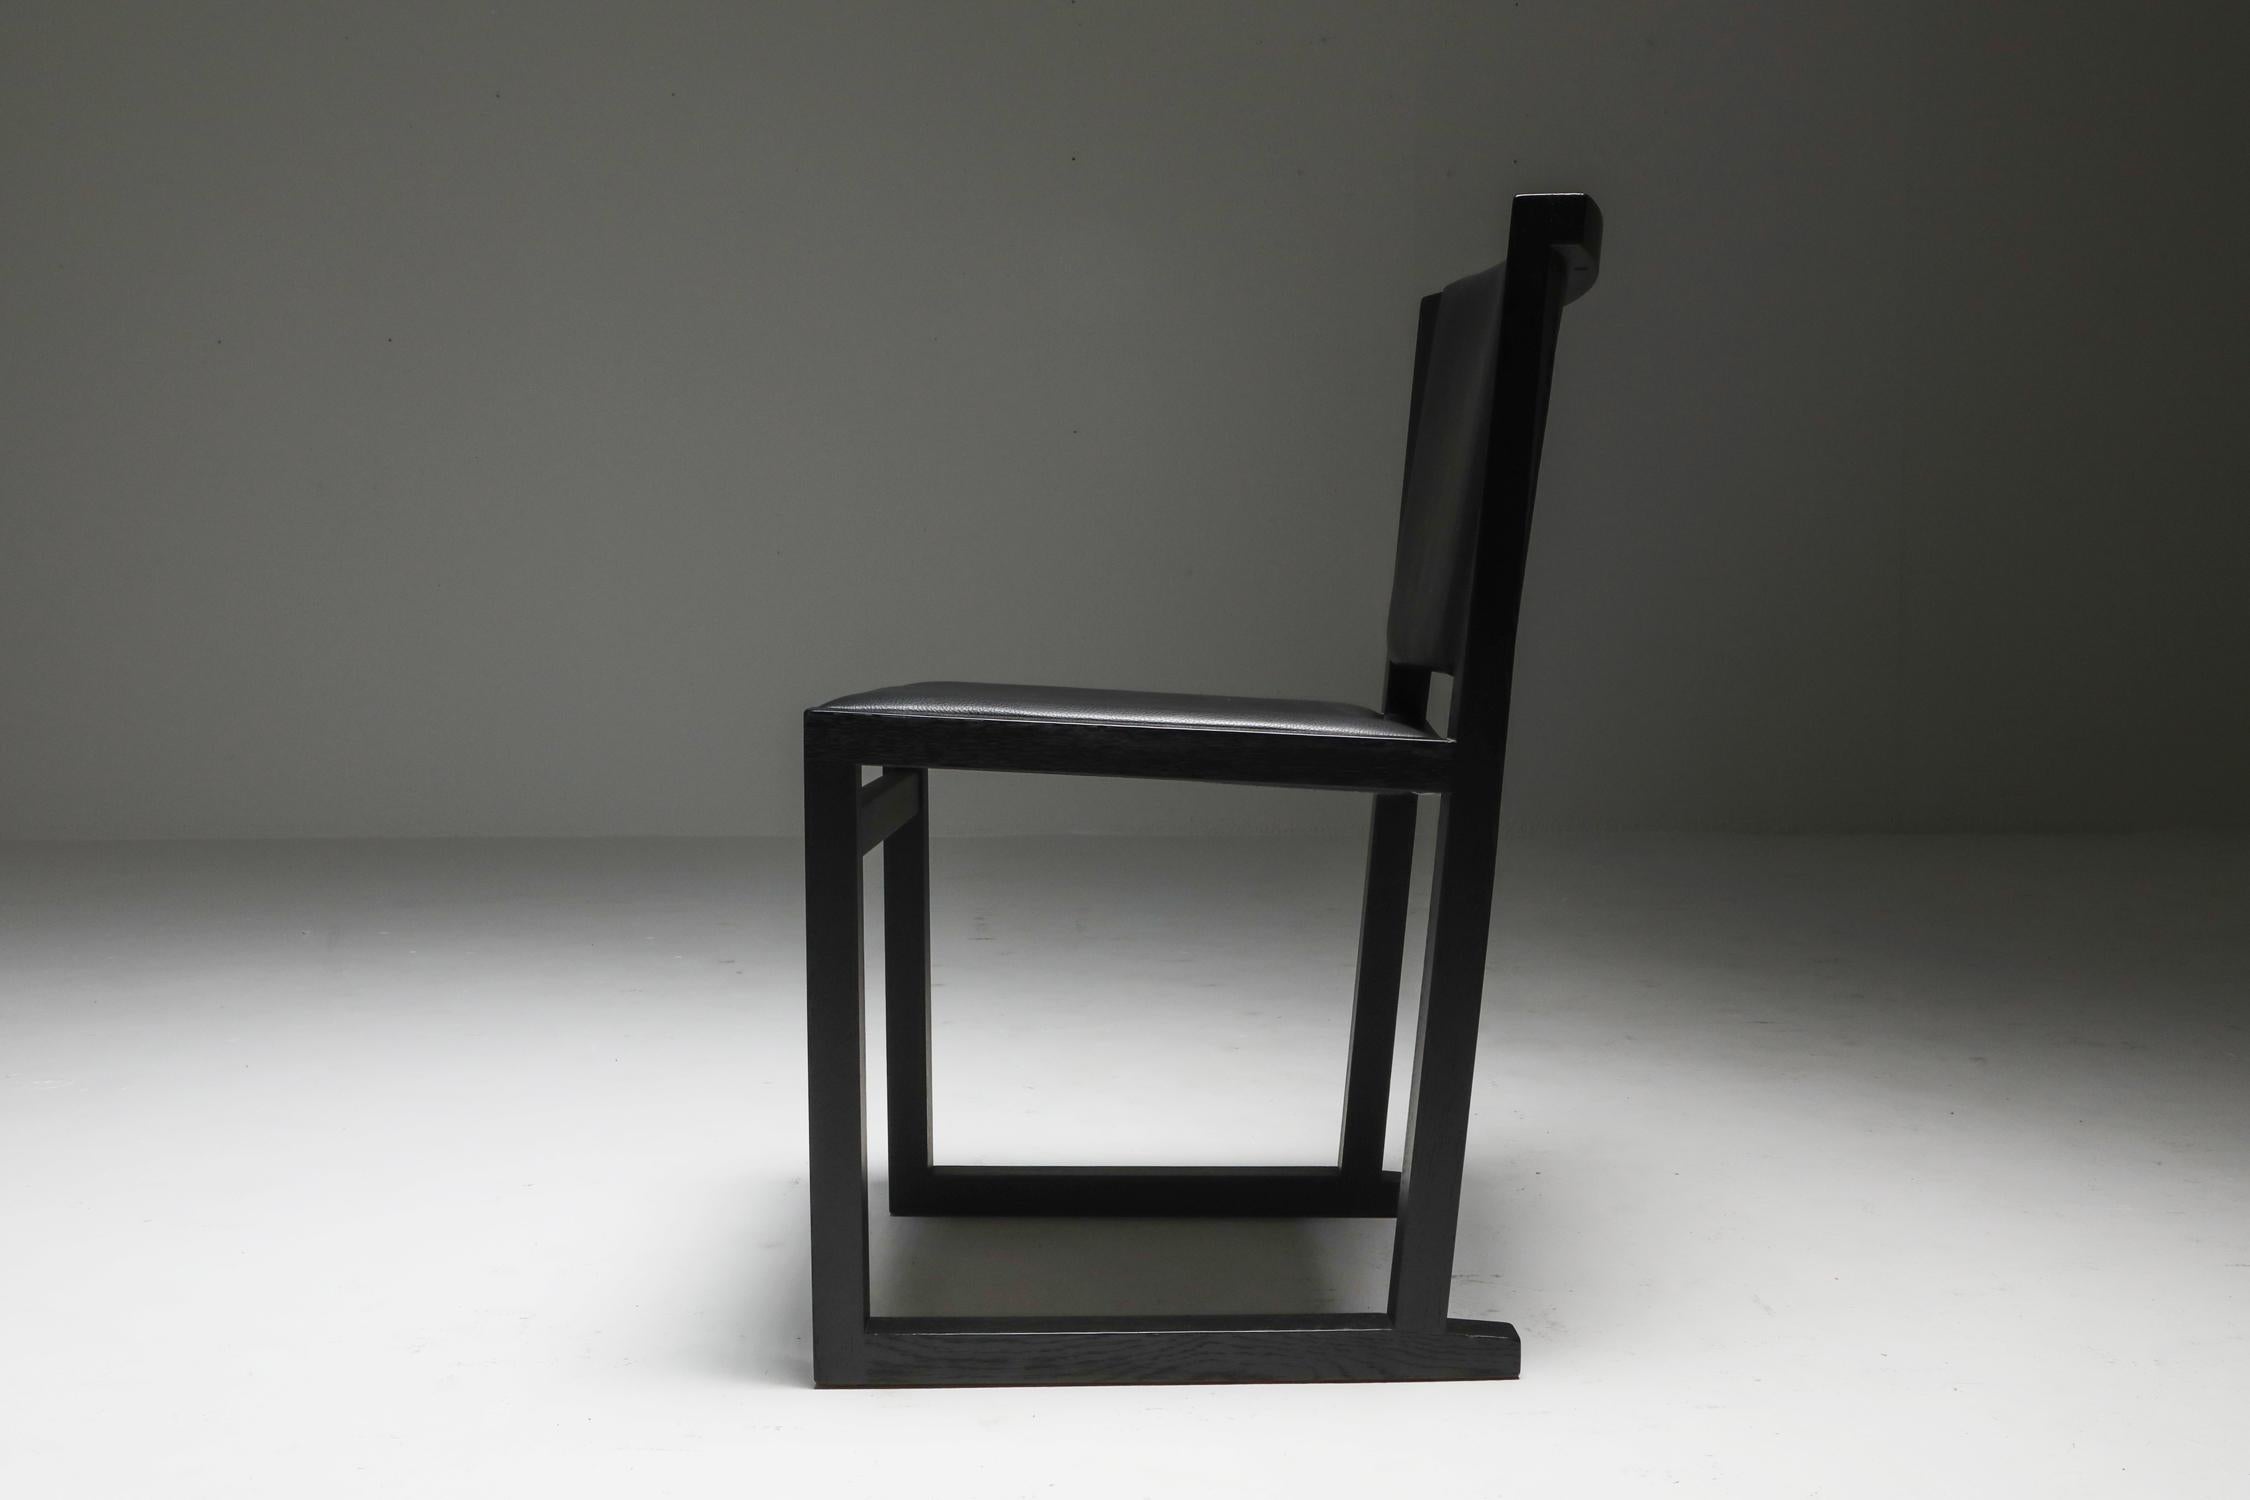 Ebonized Oak Dining Chairs by Antonio Citterio for Maxalto, 2000s For Sale 2